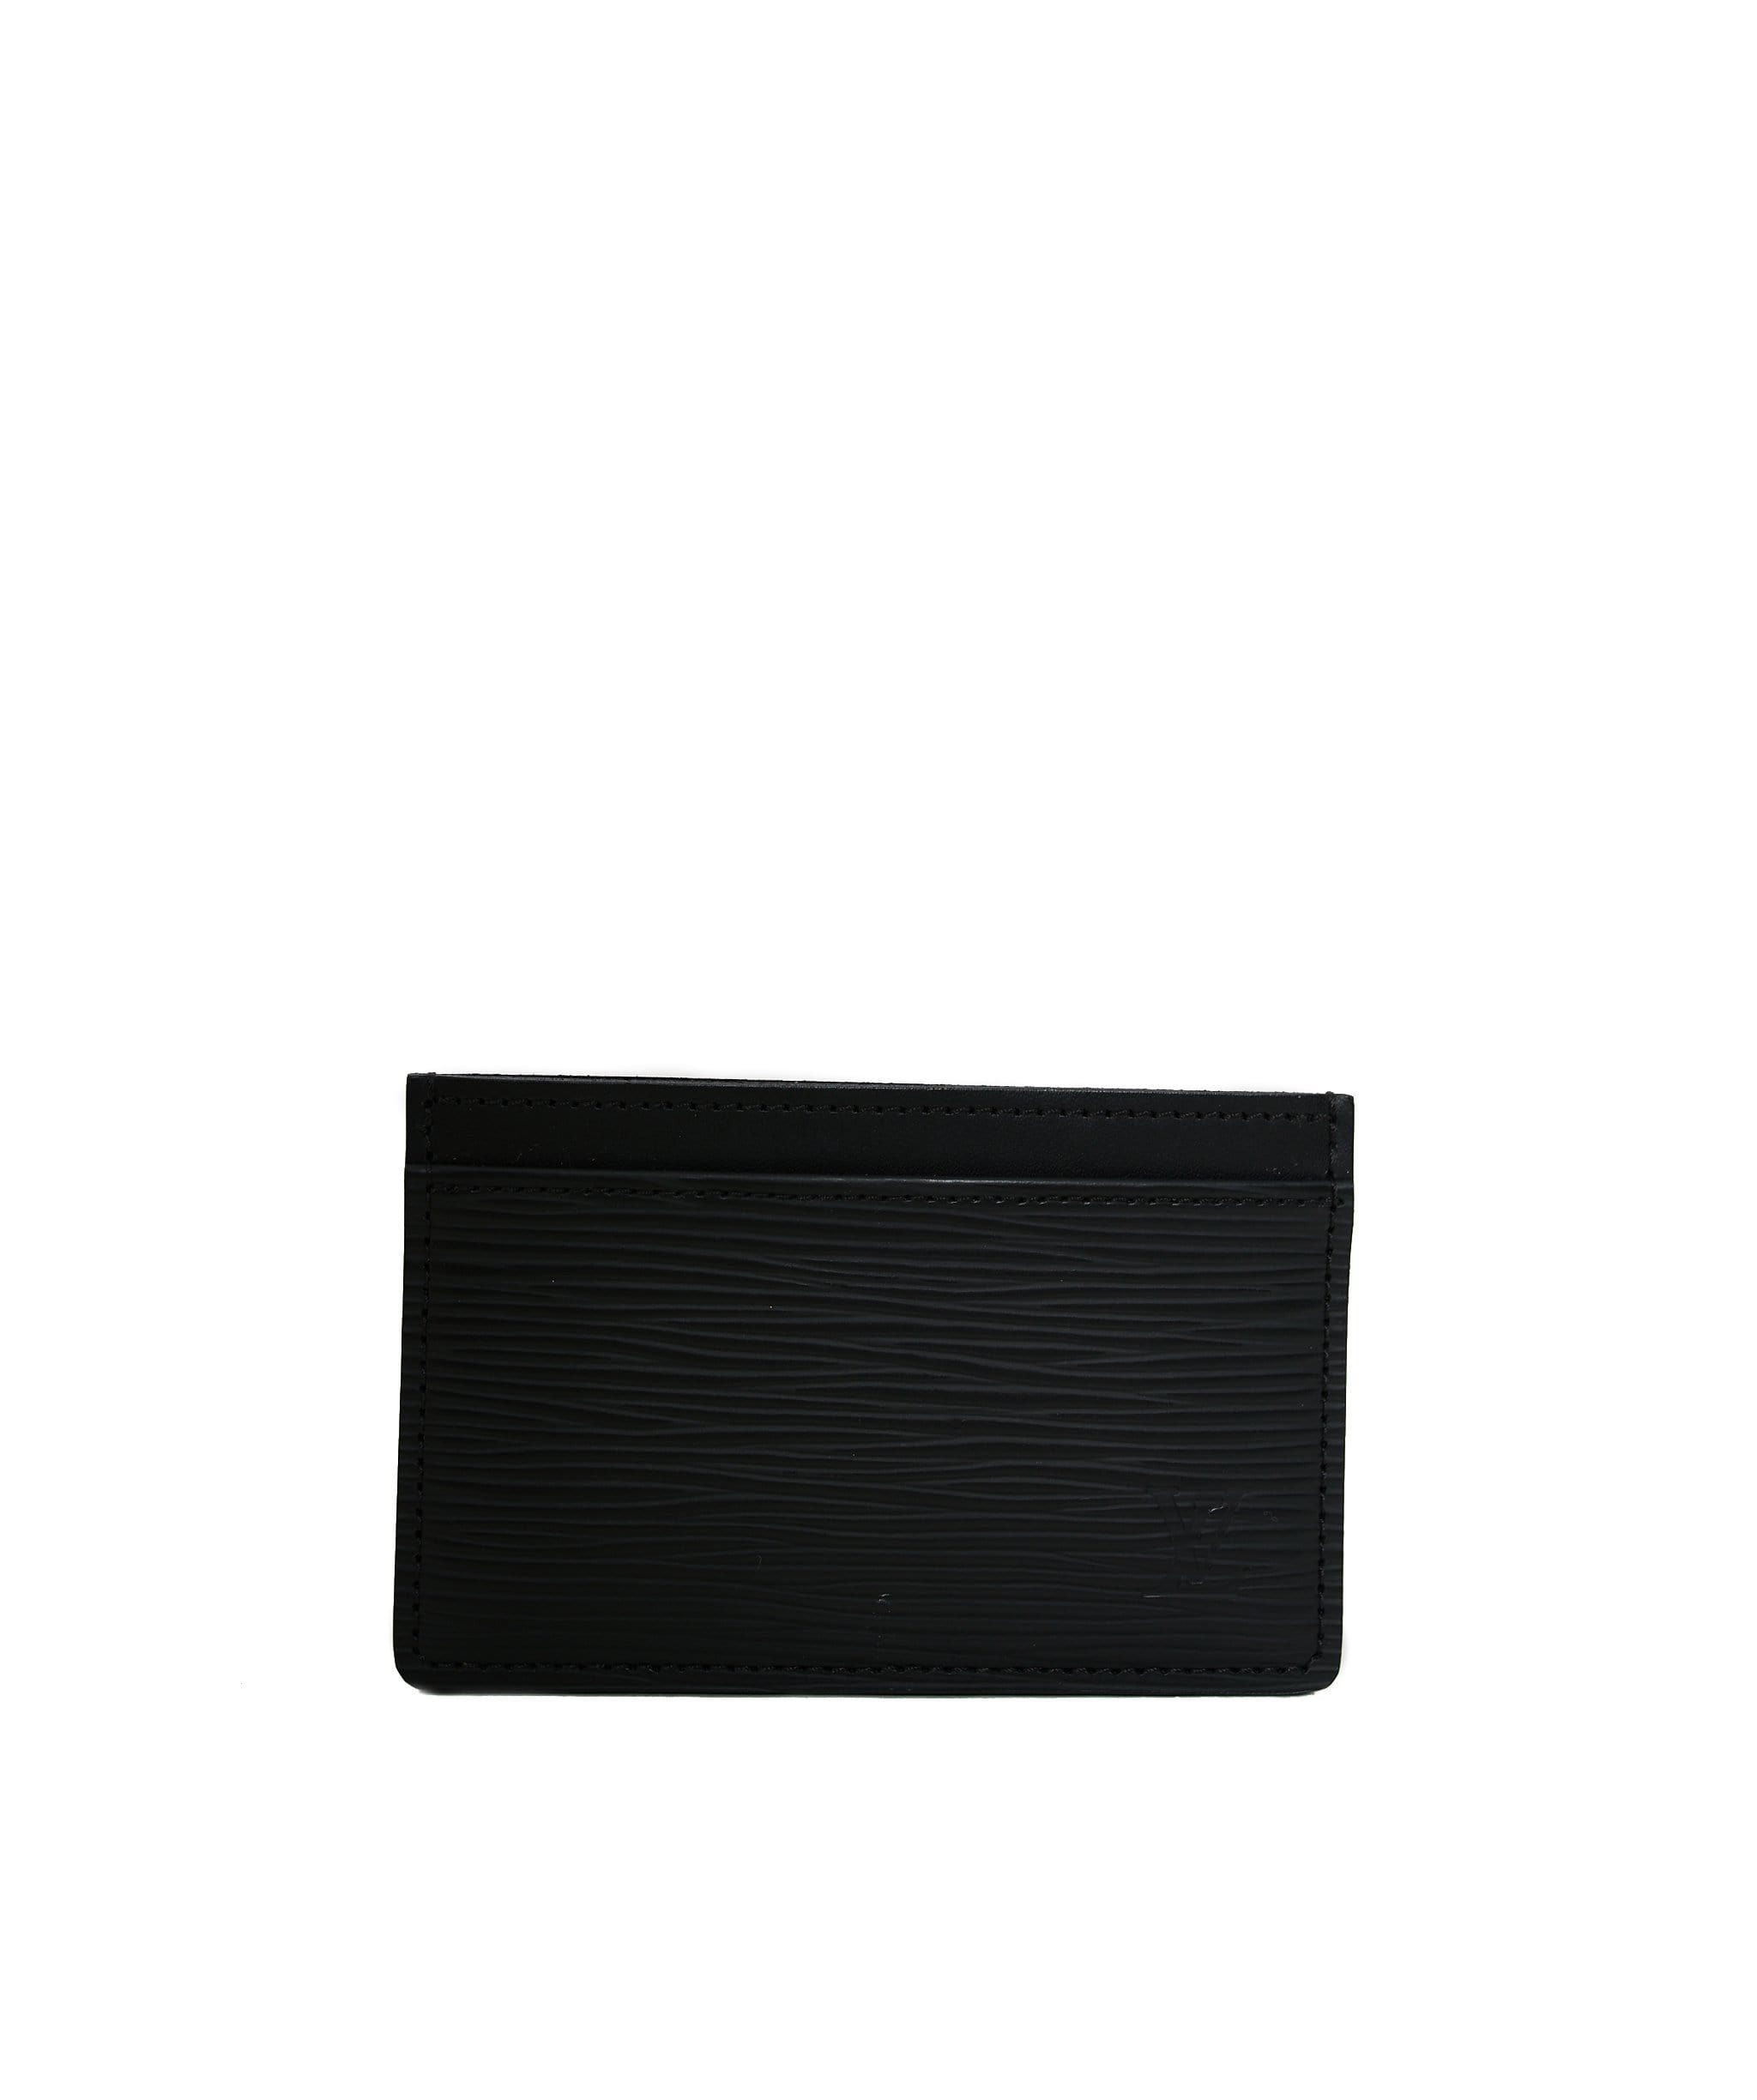 Louis Vuitton black damier card holder - ADL1112